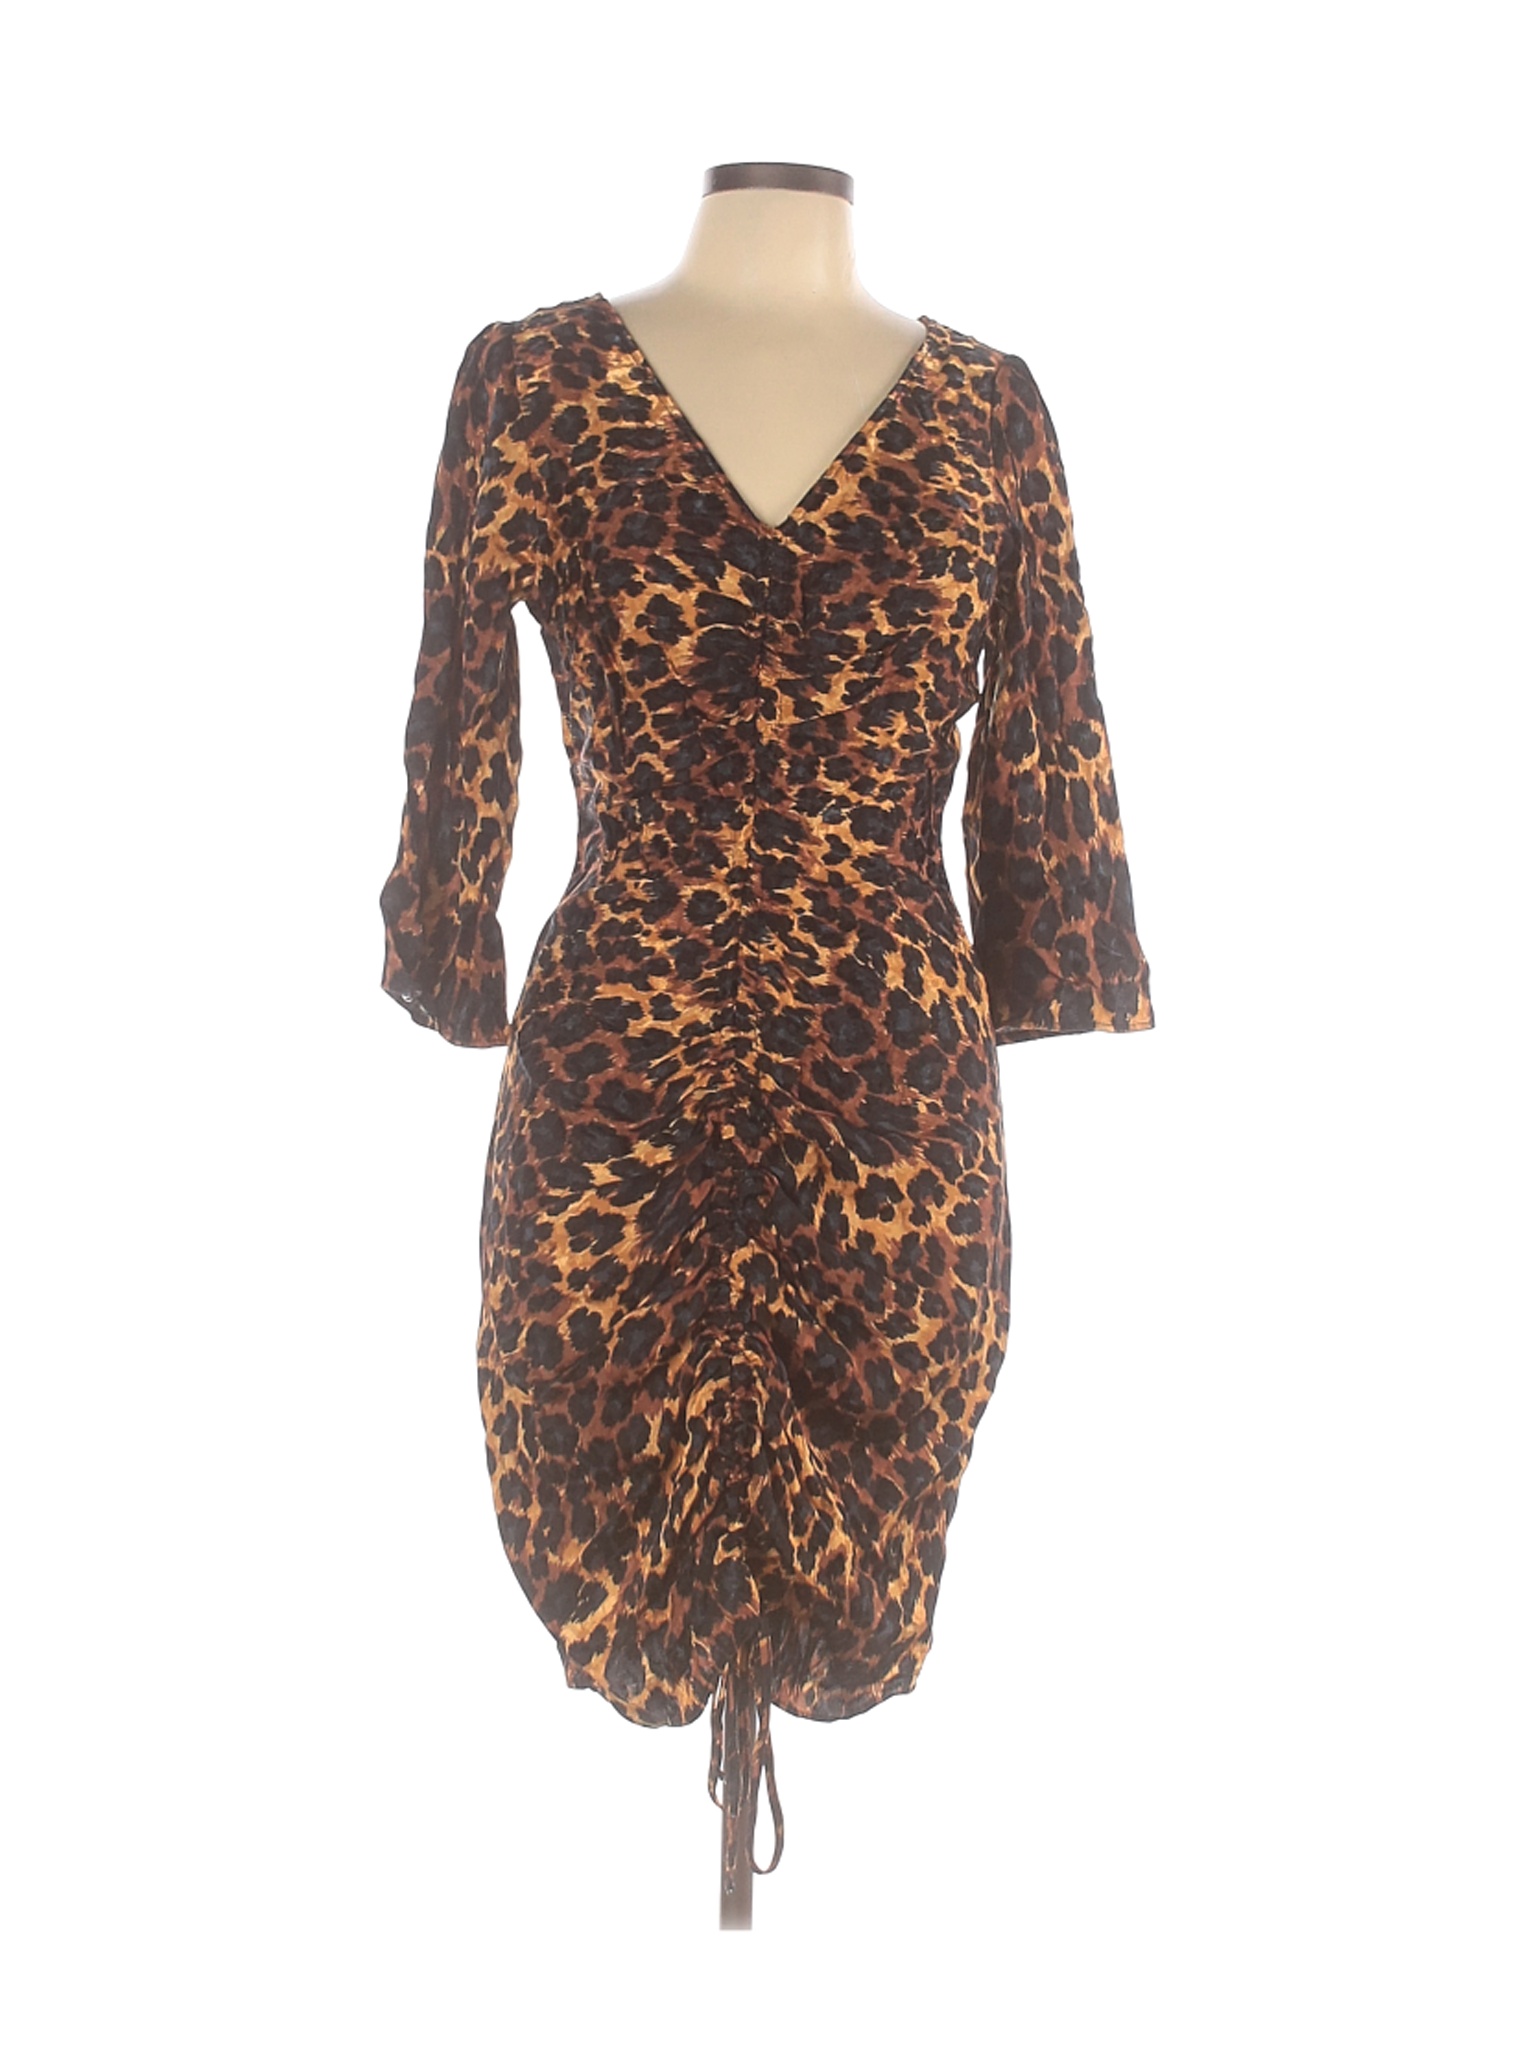 Zara Basic Women Brown Cocktail Dress L | eBay